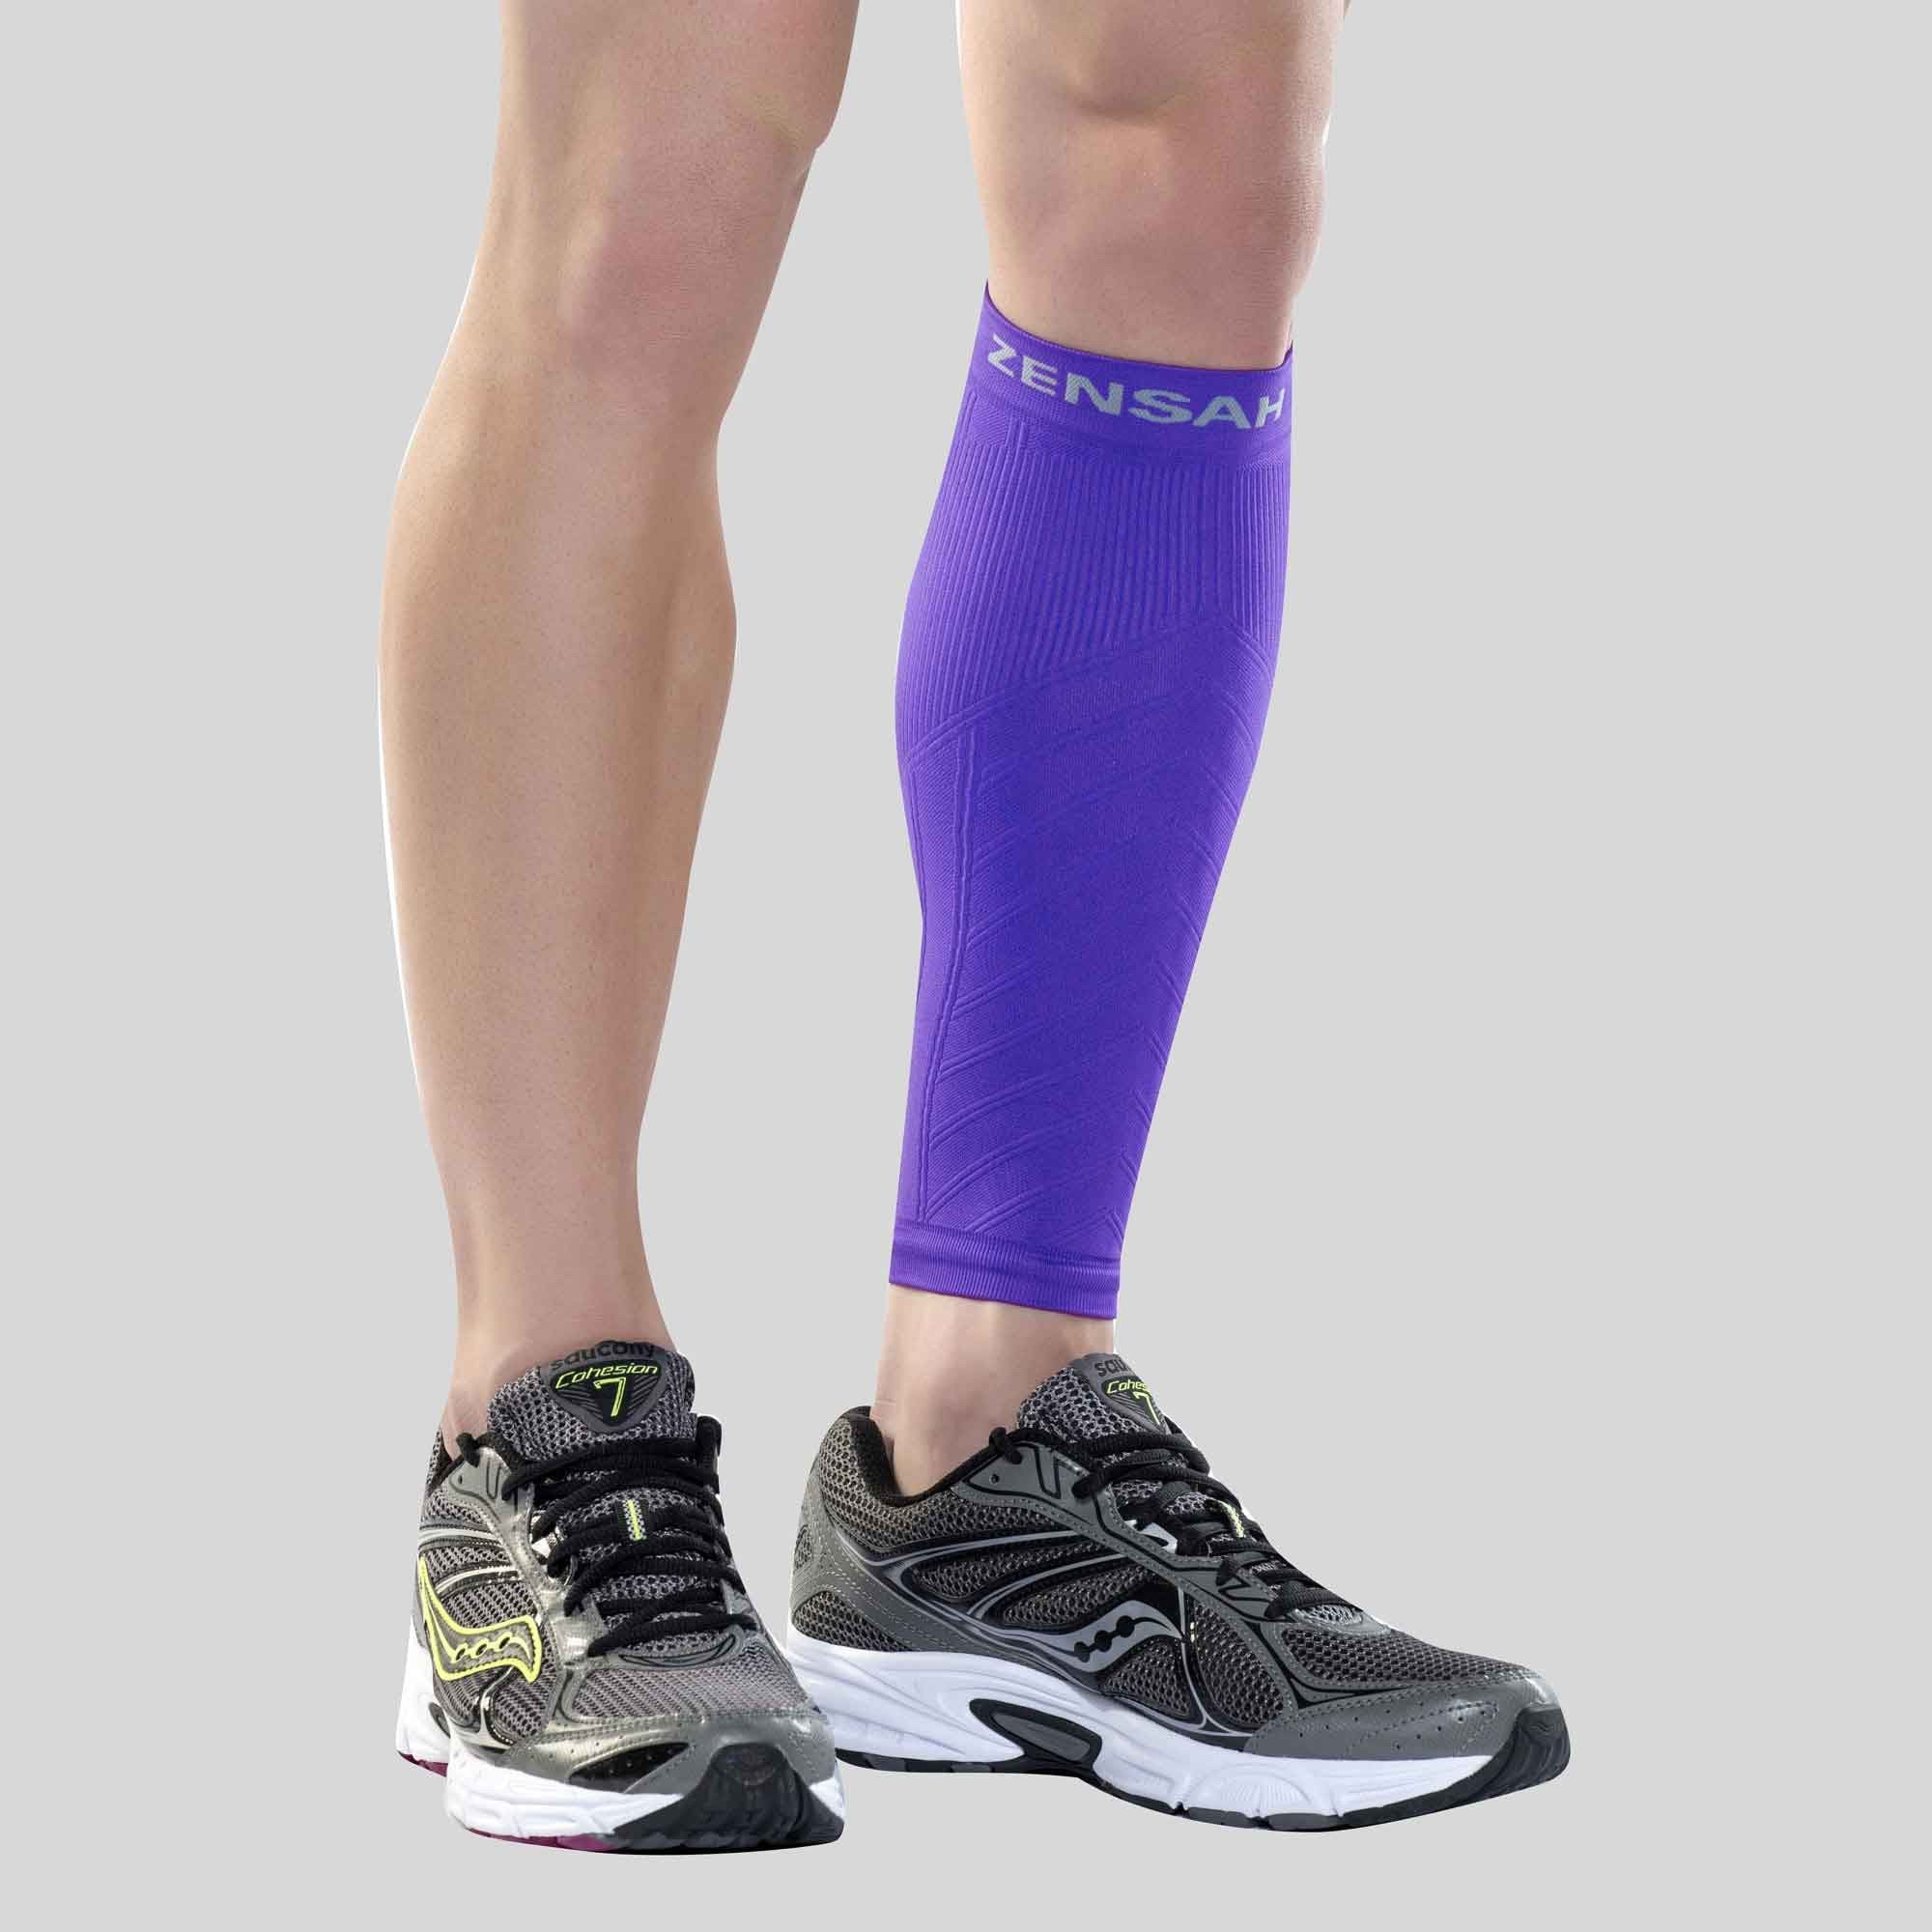 Calf Compression Sleeve Support Leg Exercise Shin Splints Sports